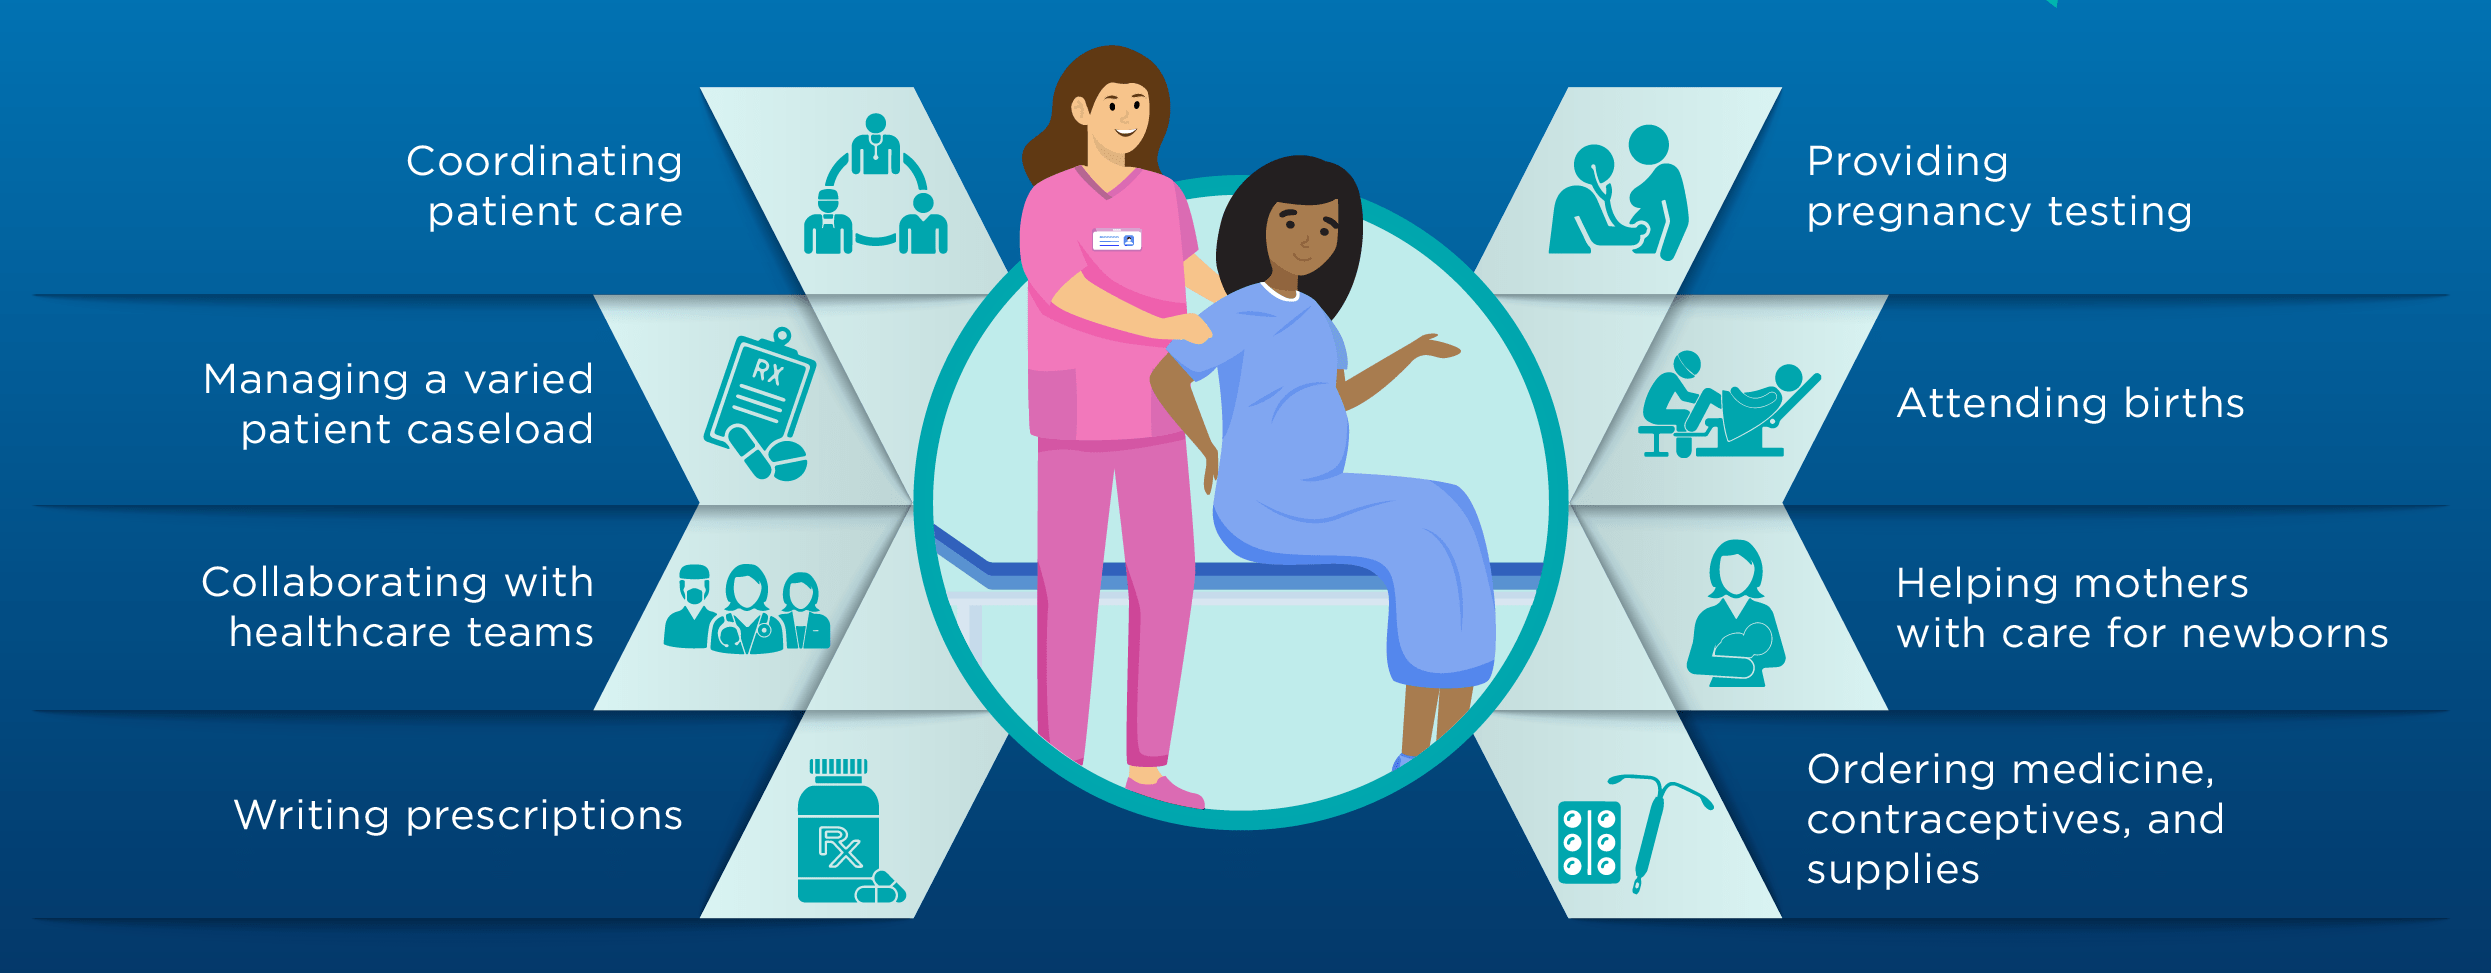 Home Nurse For Pregnancy infographic in Dubai